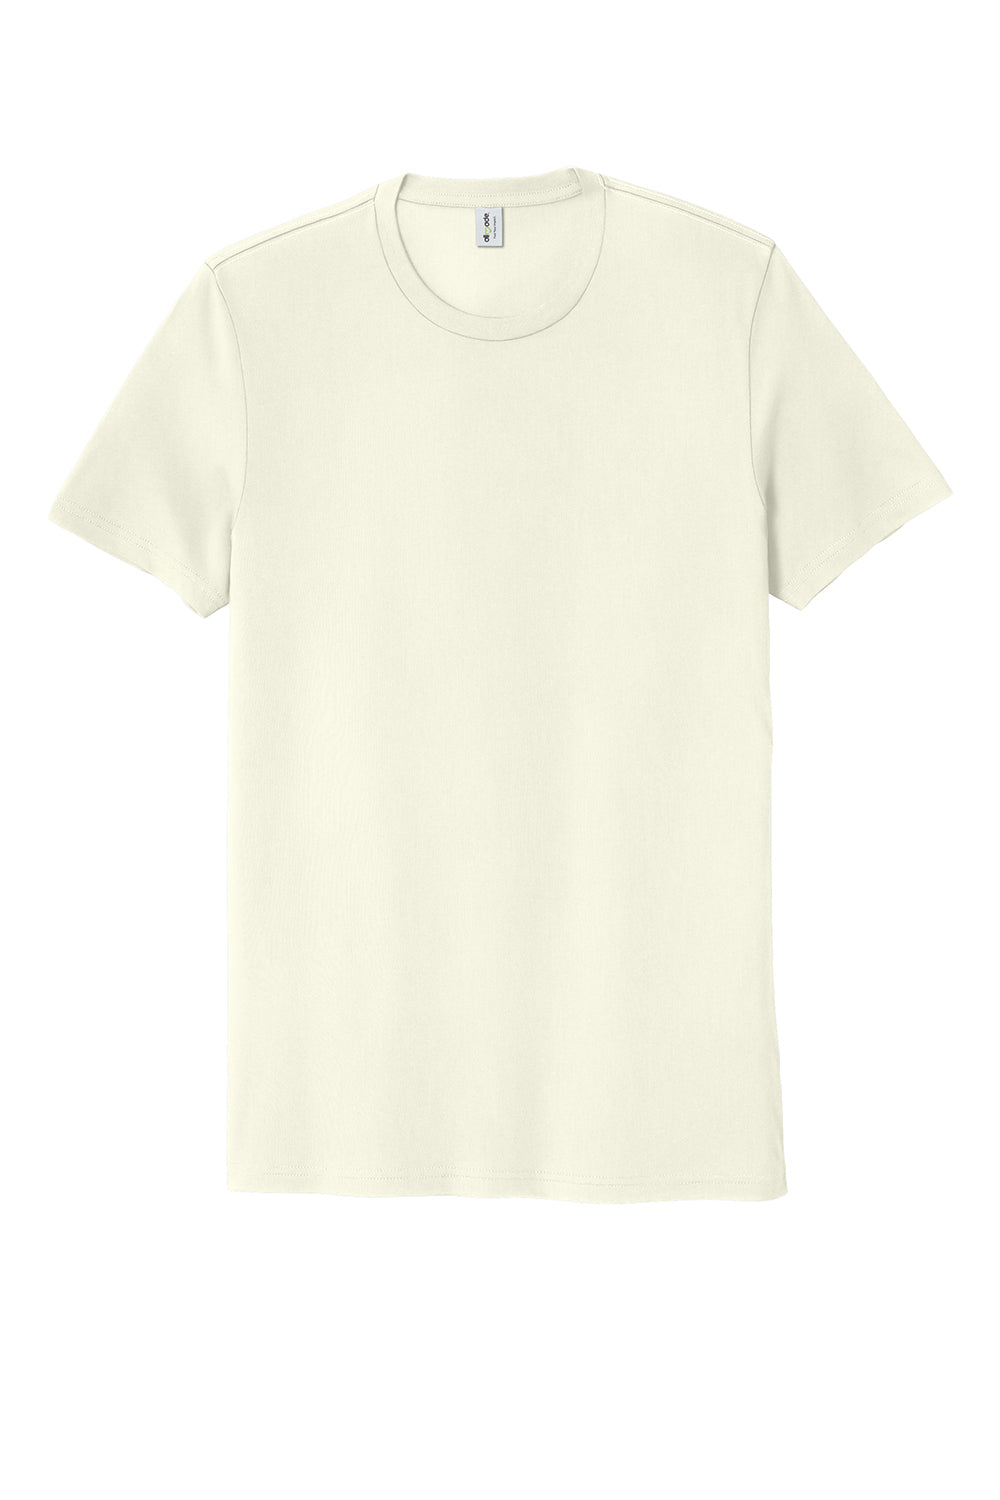 Allmade AL2100 Mens Organic Short Sleeve Crewneck T-Shirt White Sand Flat Front